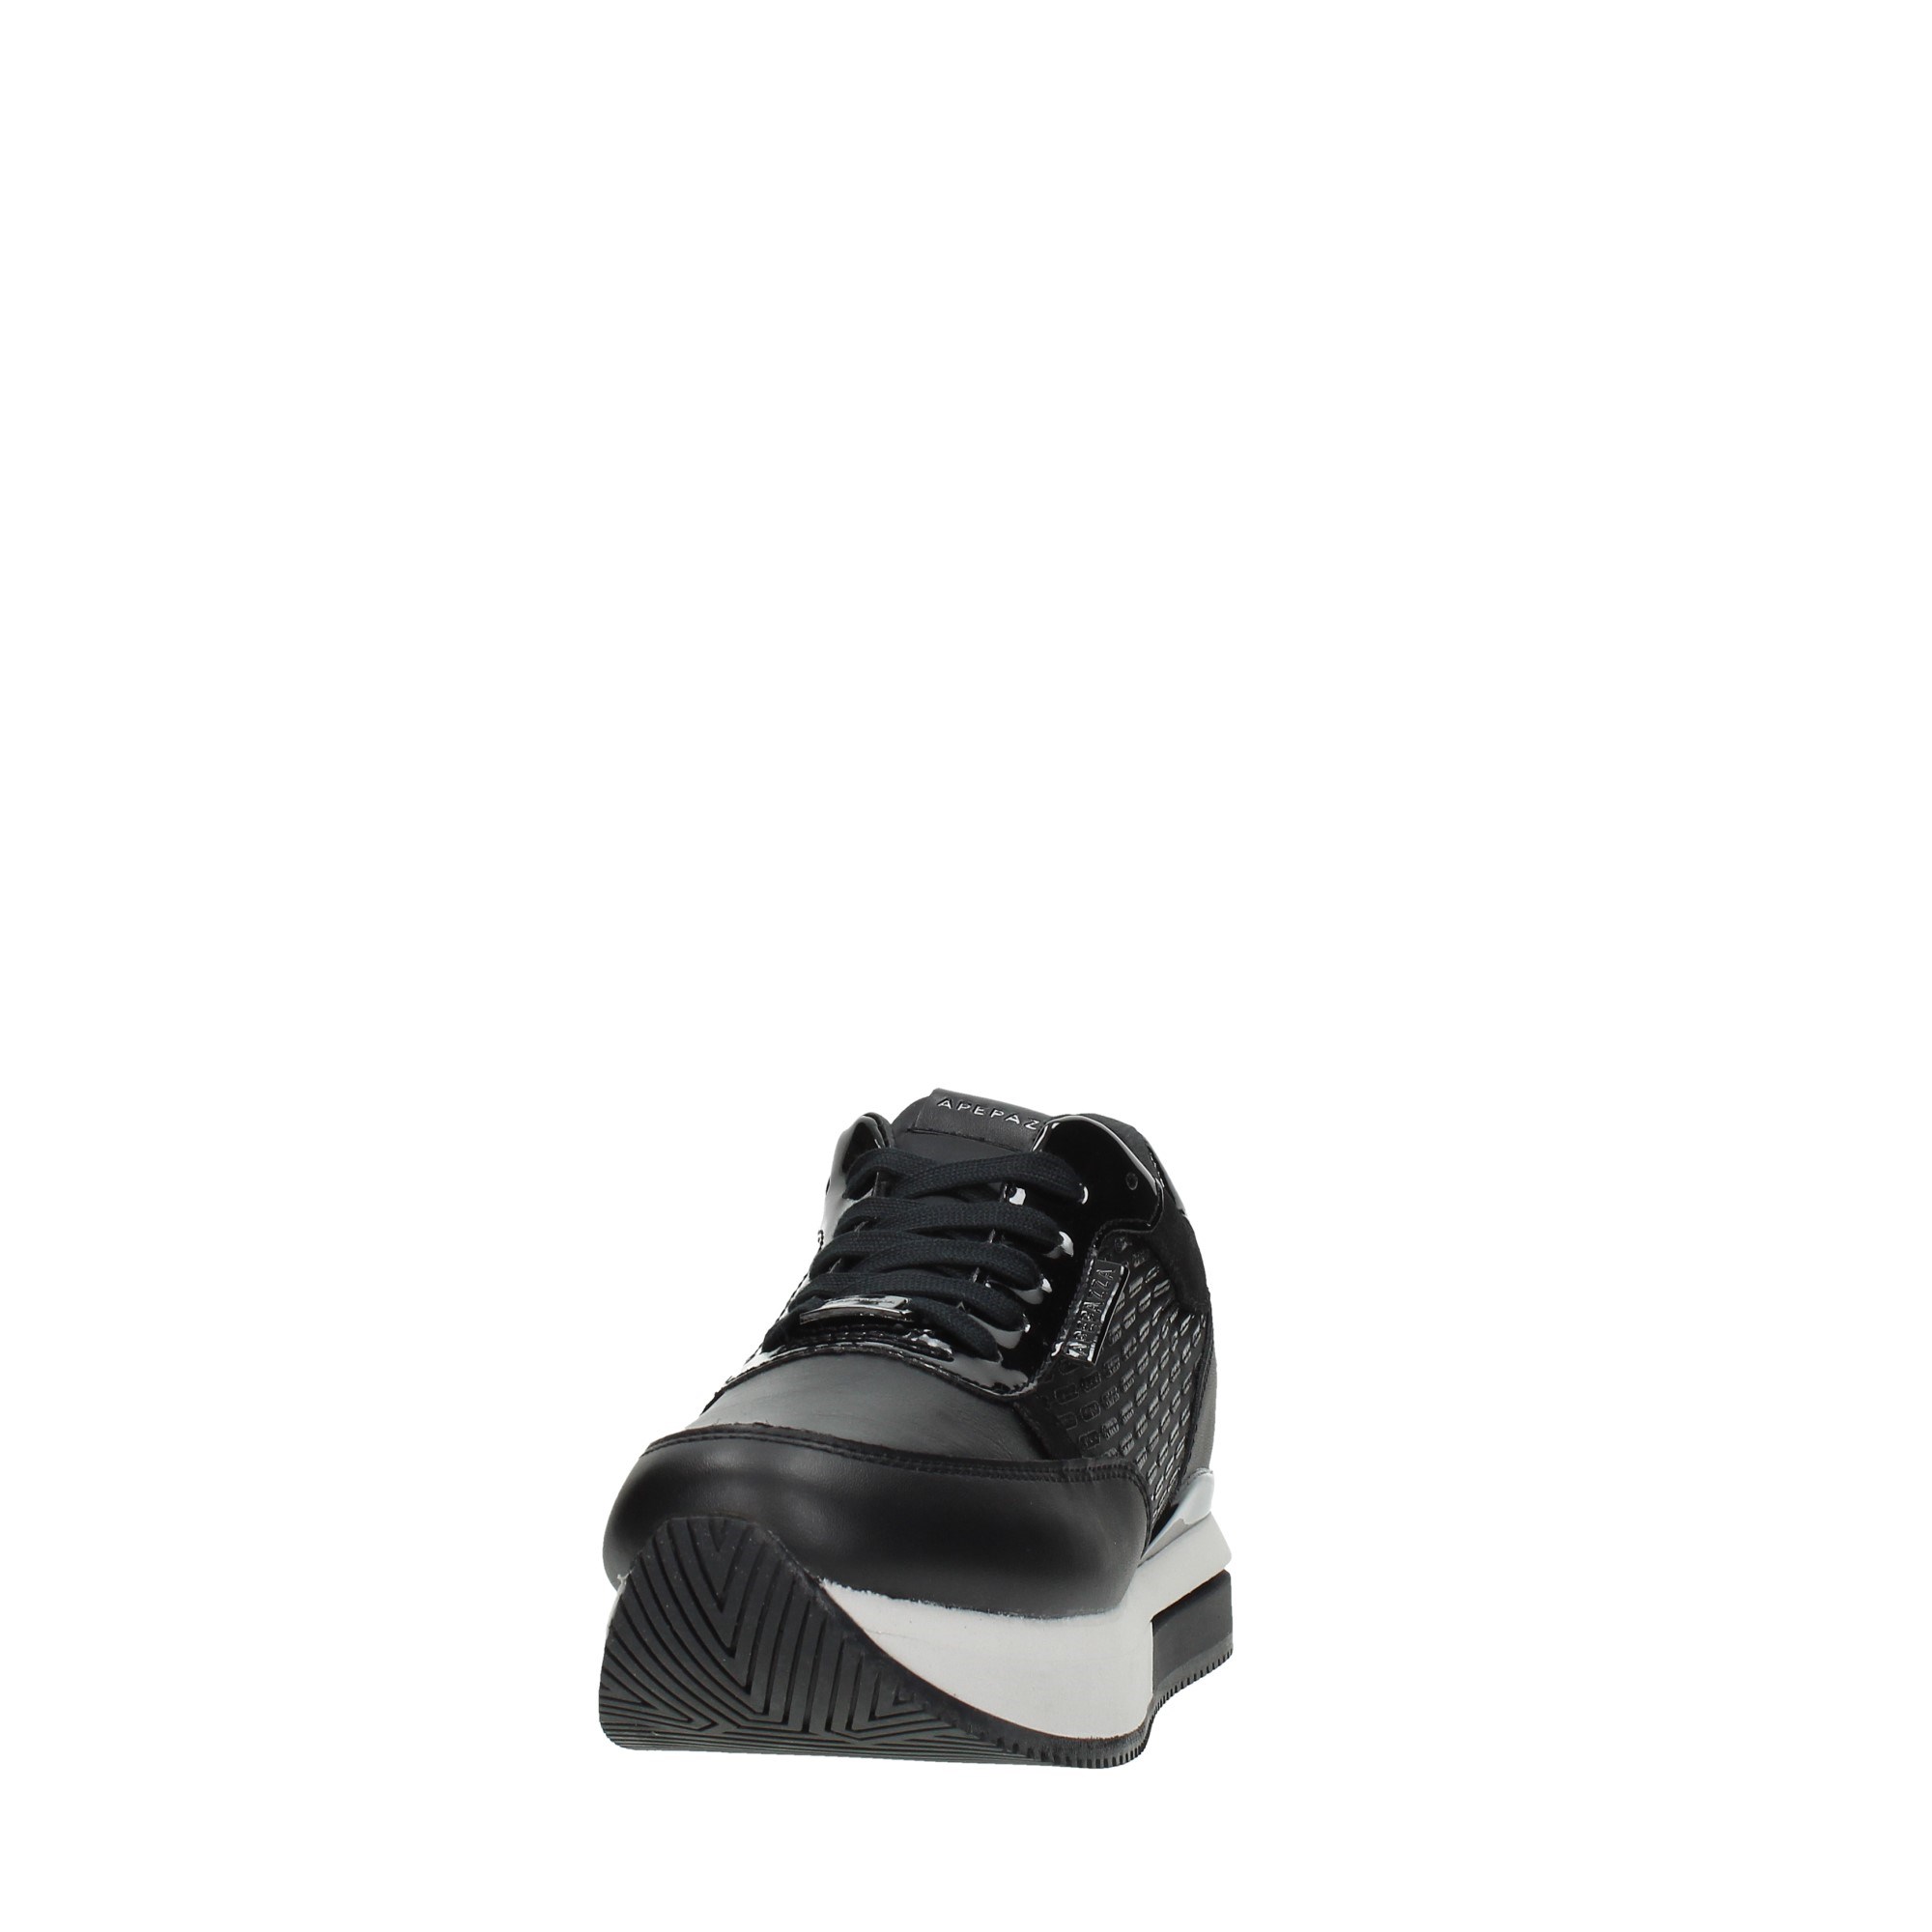 A P E P A Z Z A Shoes Women Sneakers Black F1RSD18/EMB